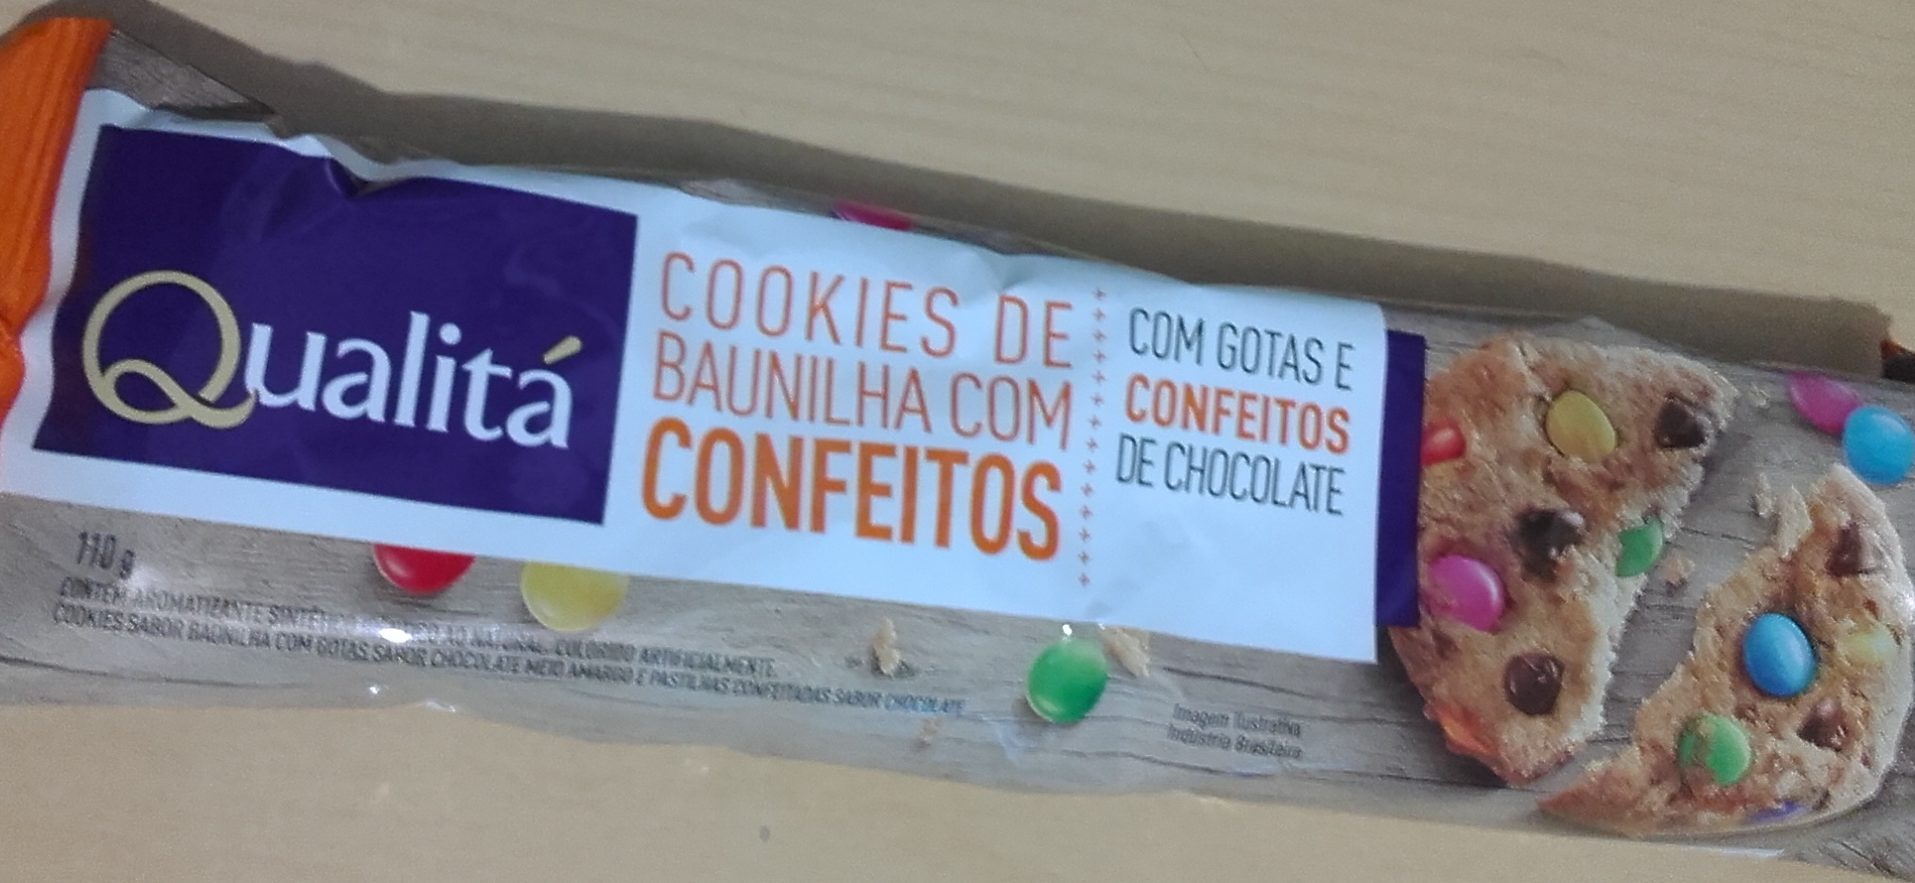 Cookies de baunilha co confeitos - Product - pt